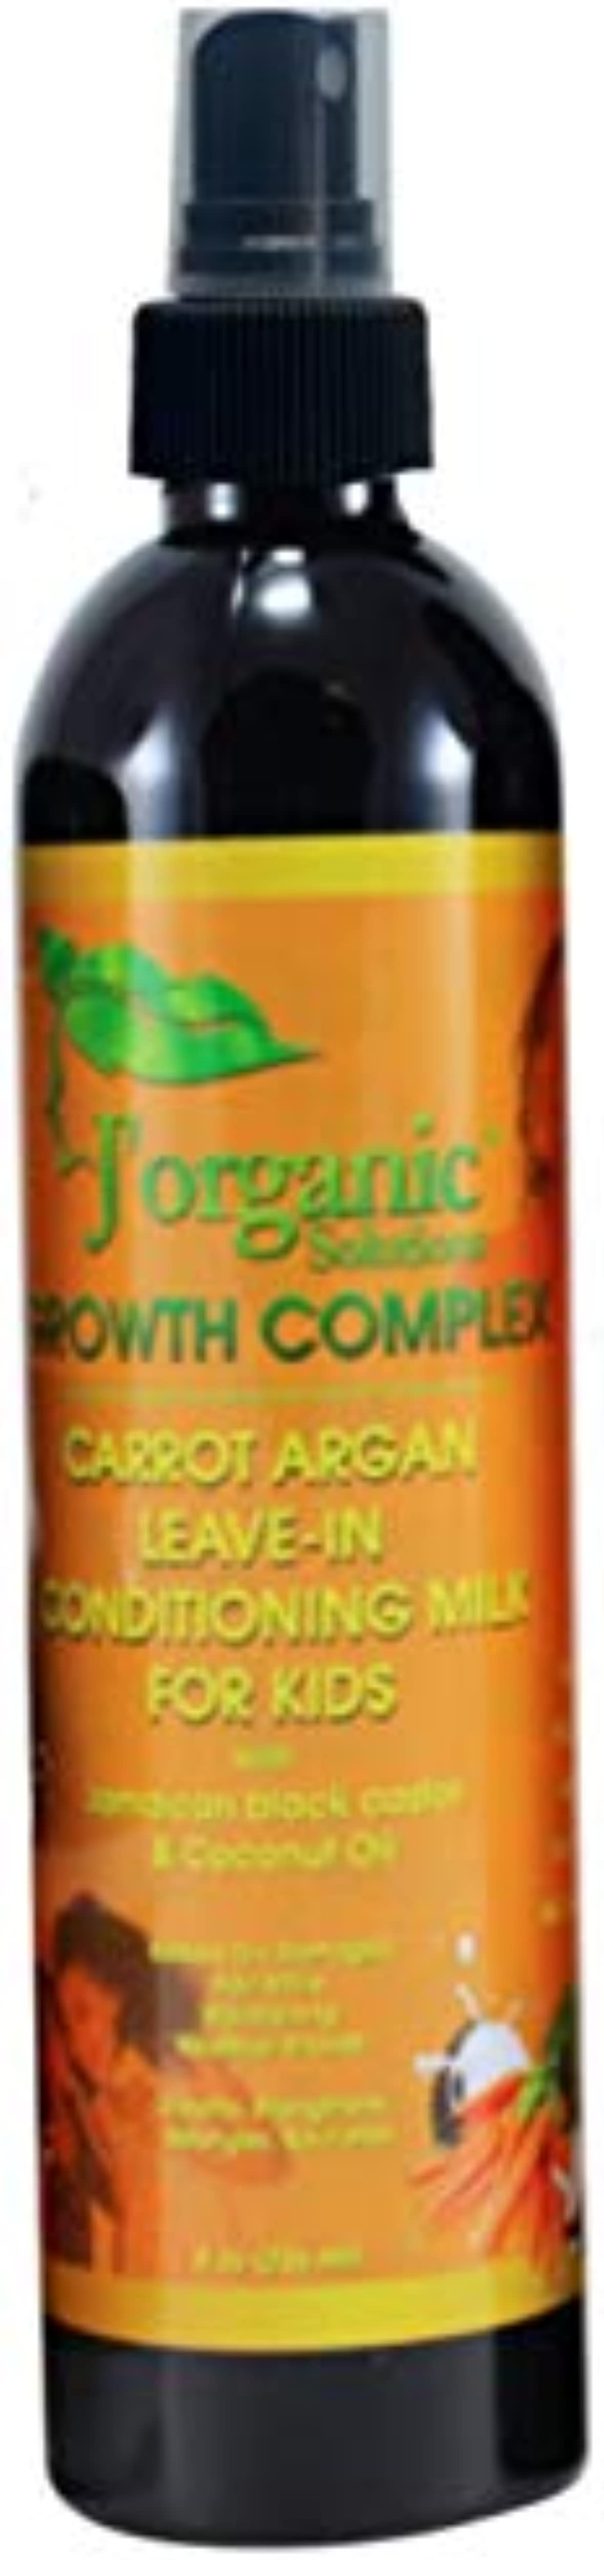 J’Organic Solutions Carrot Argan Kids Leave-In Conditioning Milk Detangler with Jamaican black castor, coconut oil & more